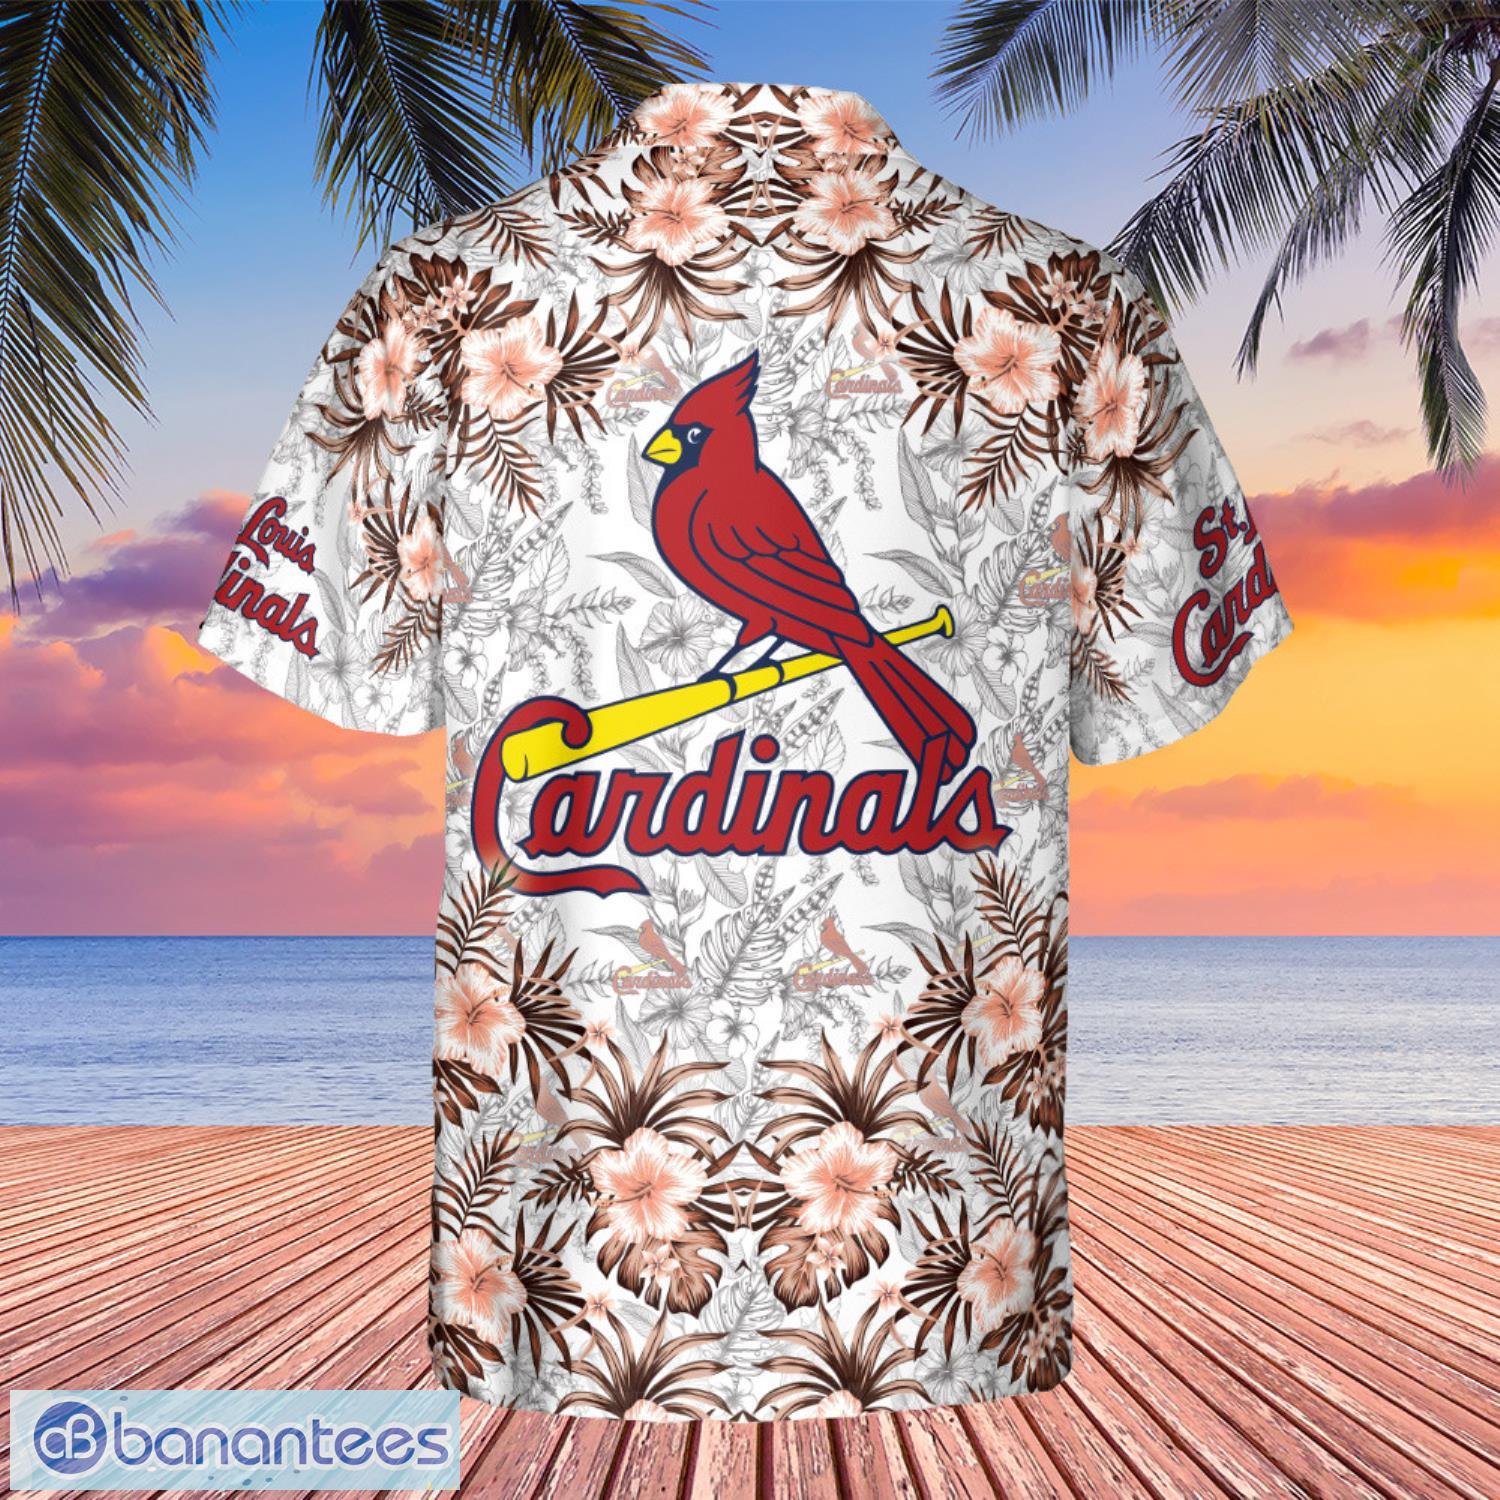 St. Louis Cardinals Retro Summer Pattern Hawaiian Shirt - Banantees